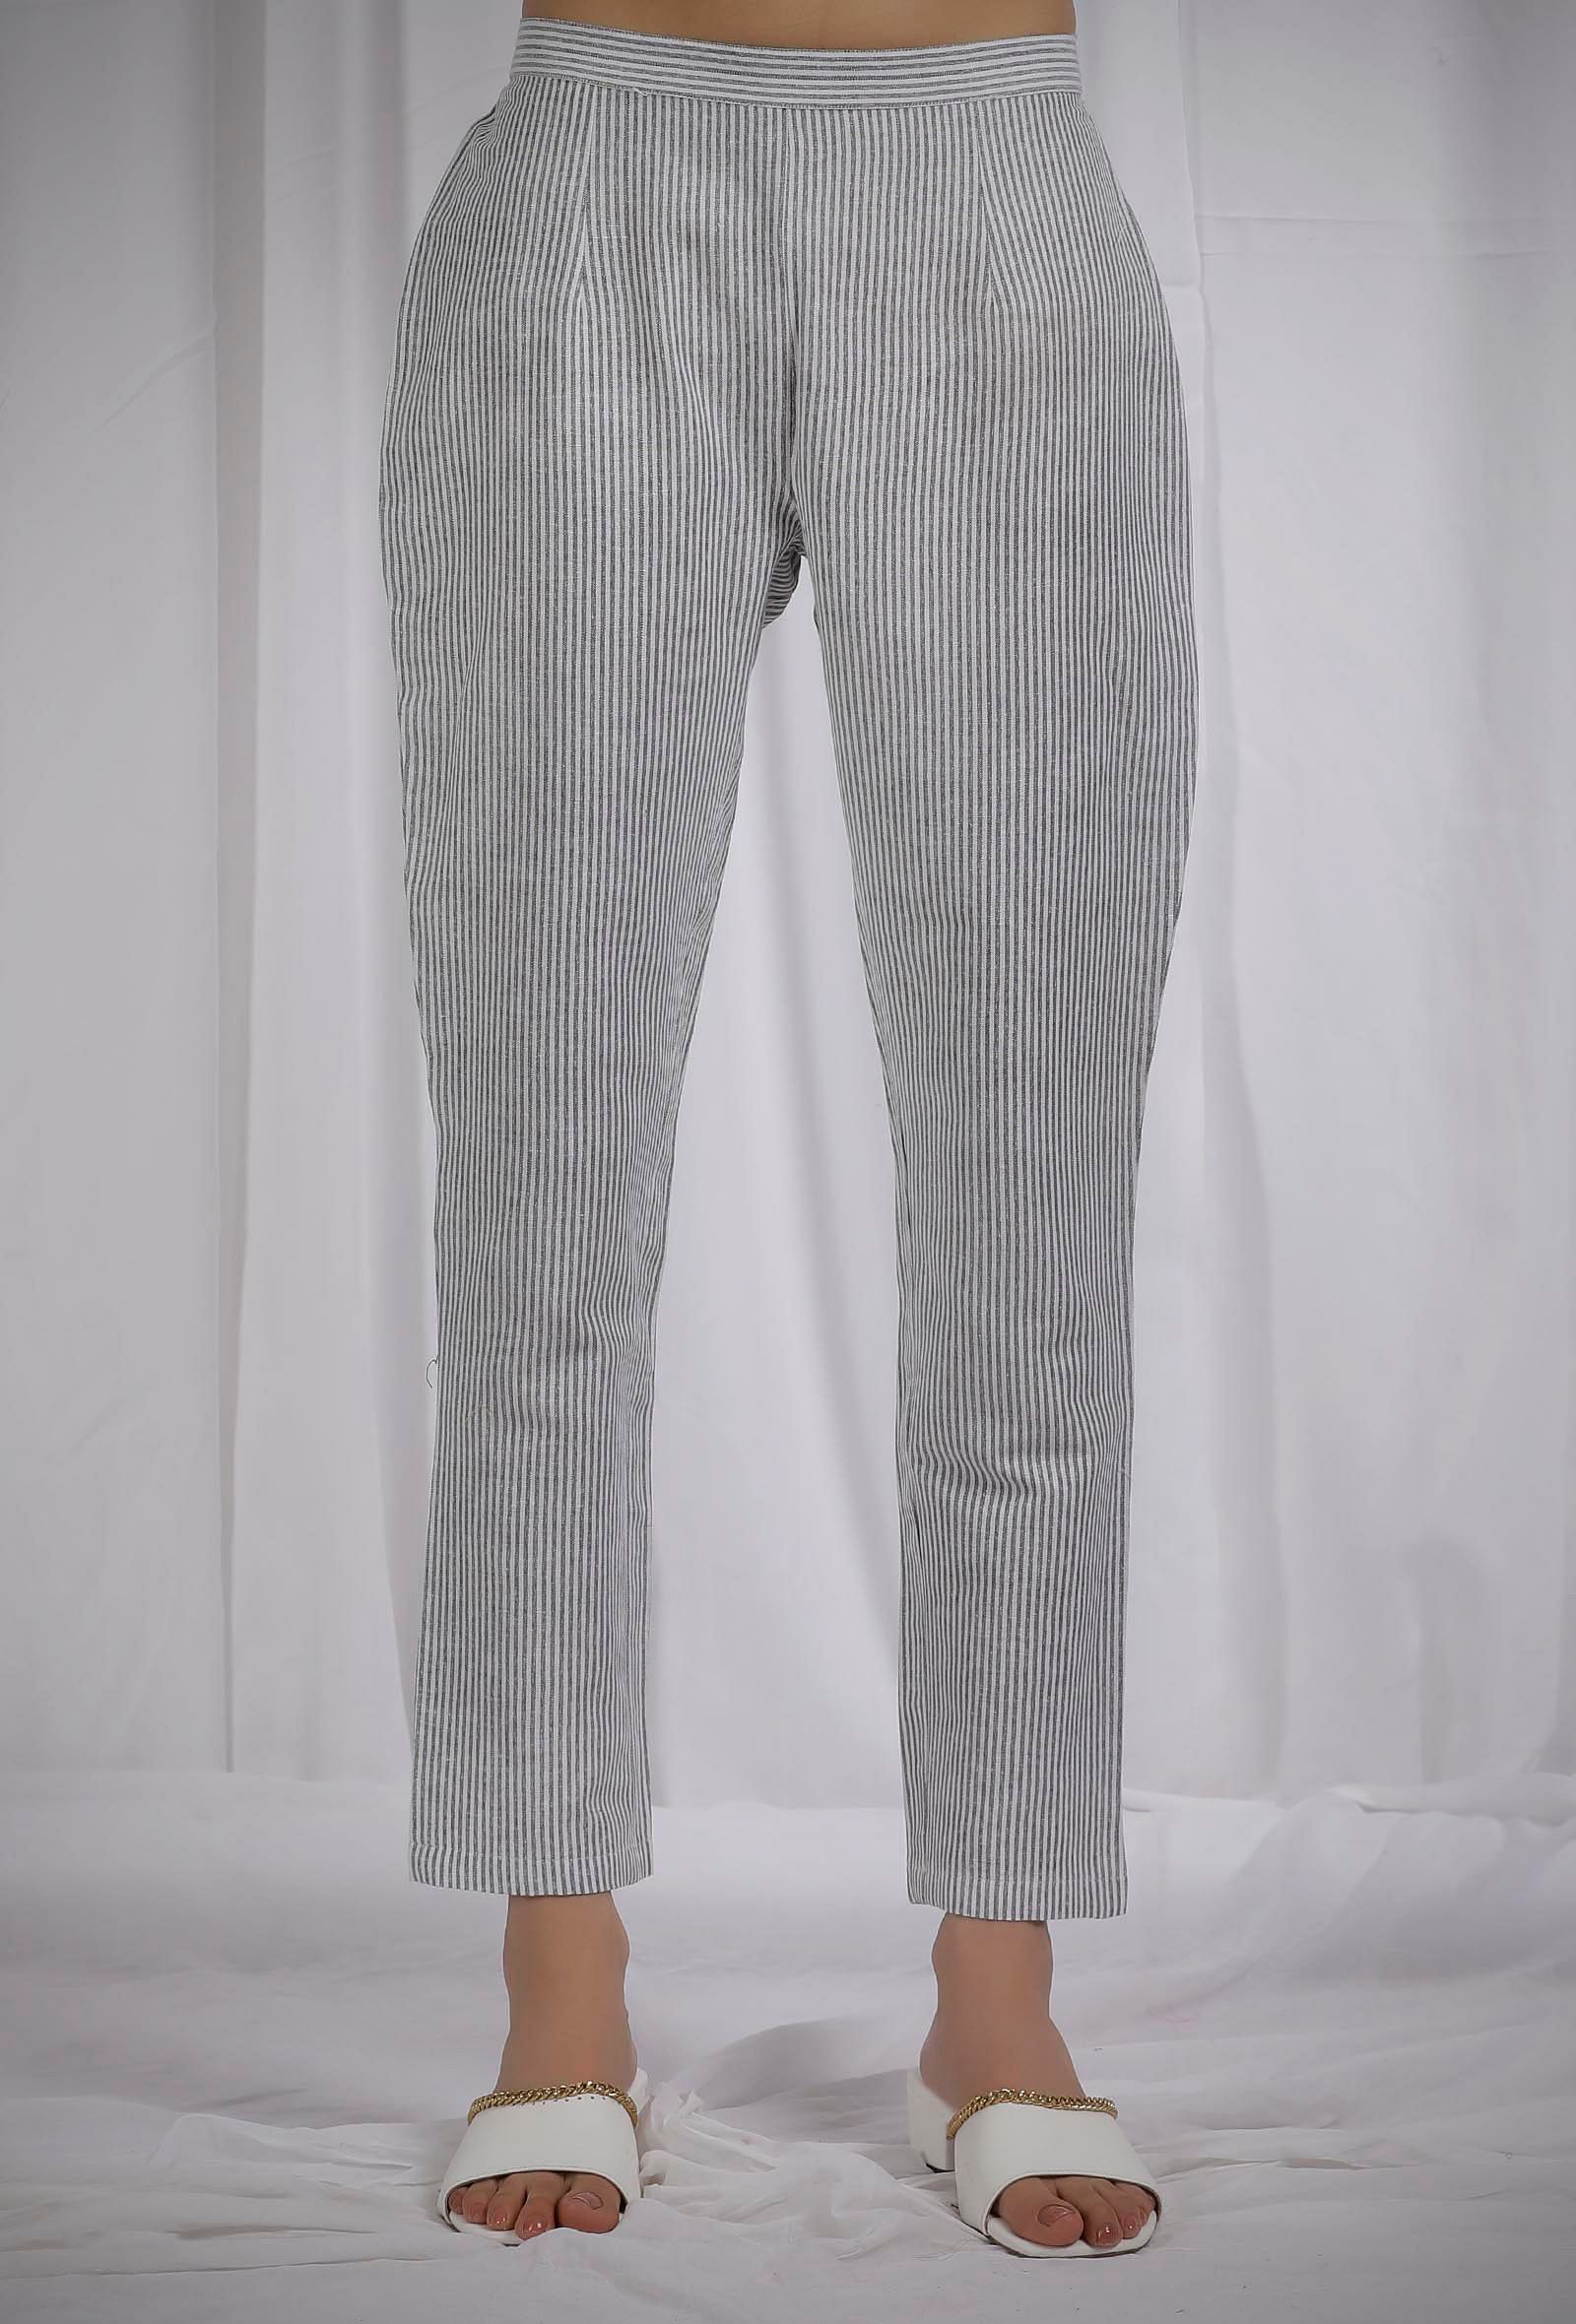 Buy Womens Linen Casual Wear Regular Fit PantsCottonworld